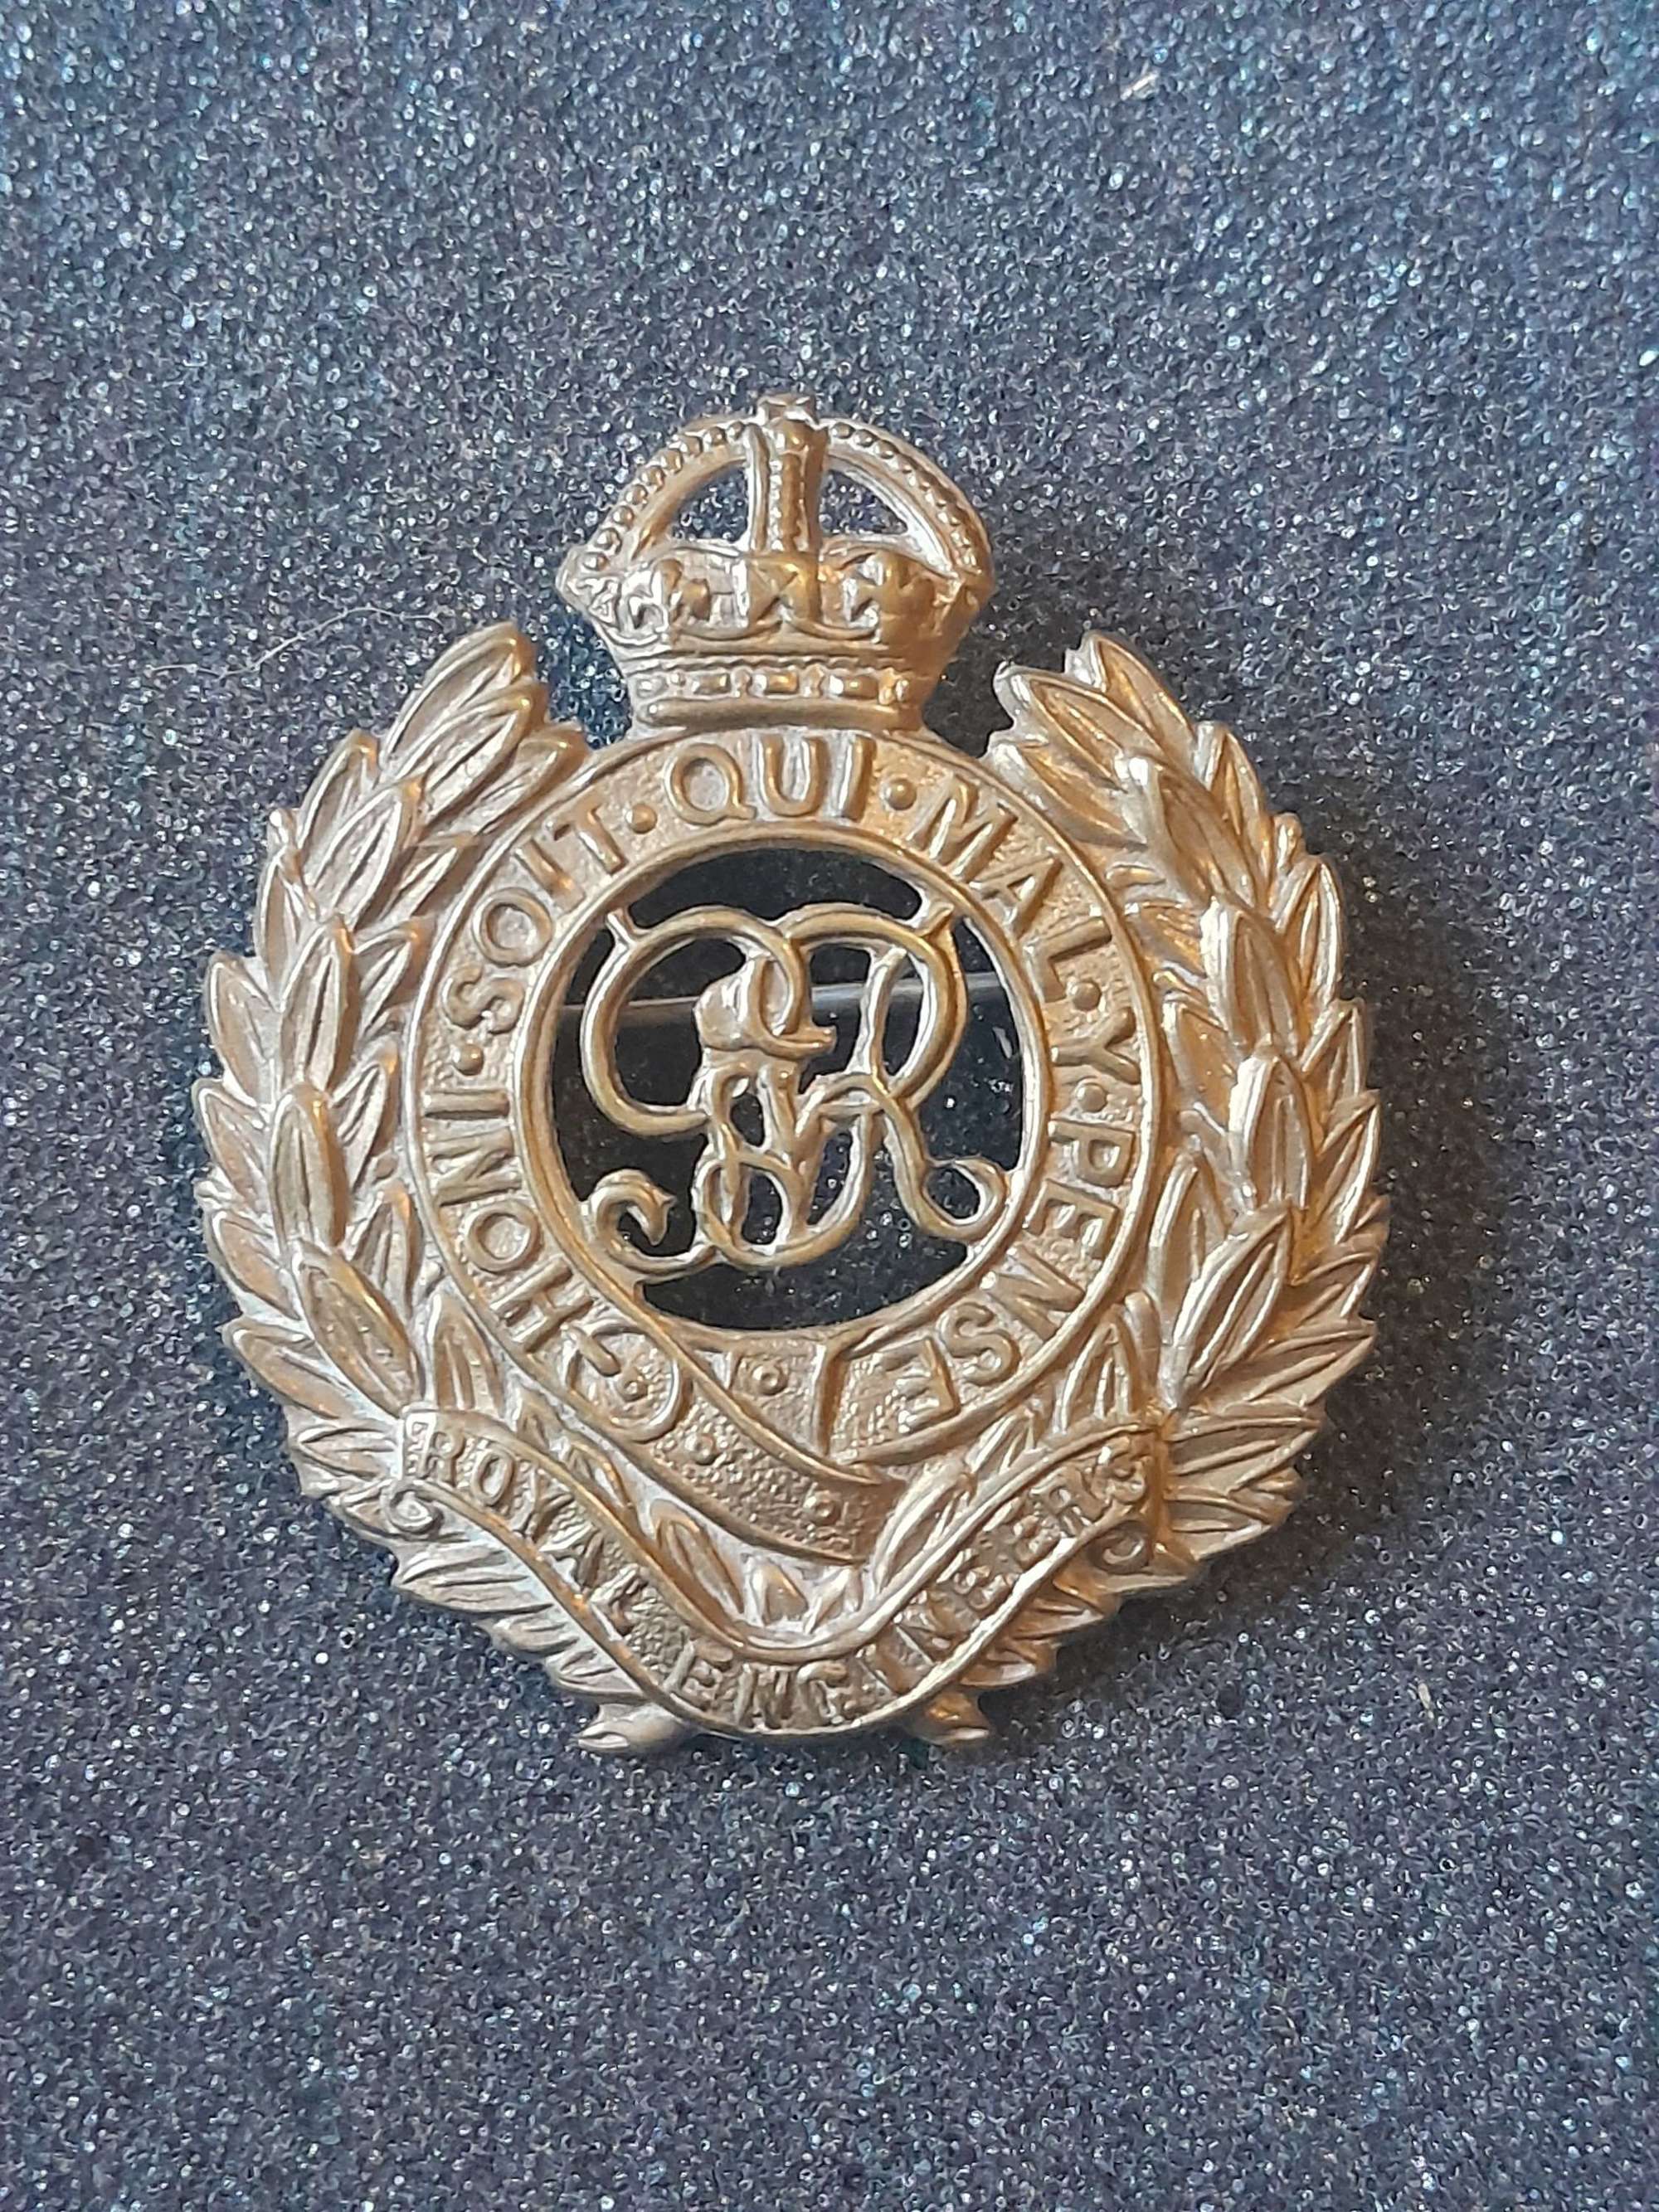 World War One Royal Engineers Sweetheart Badge